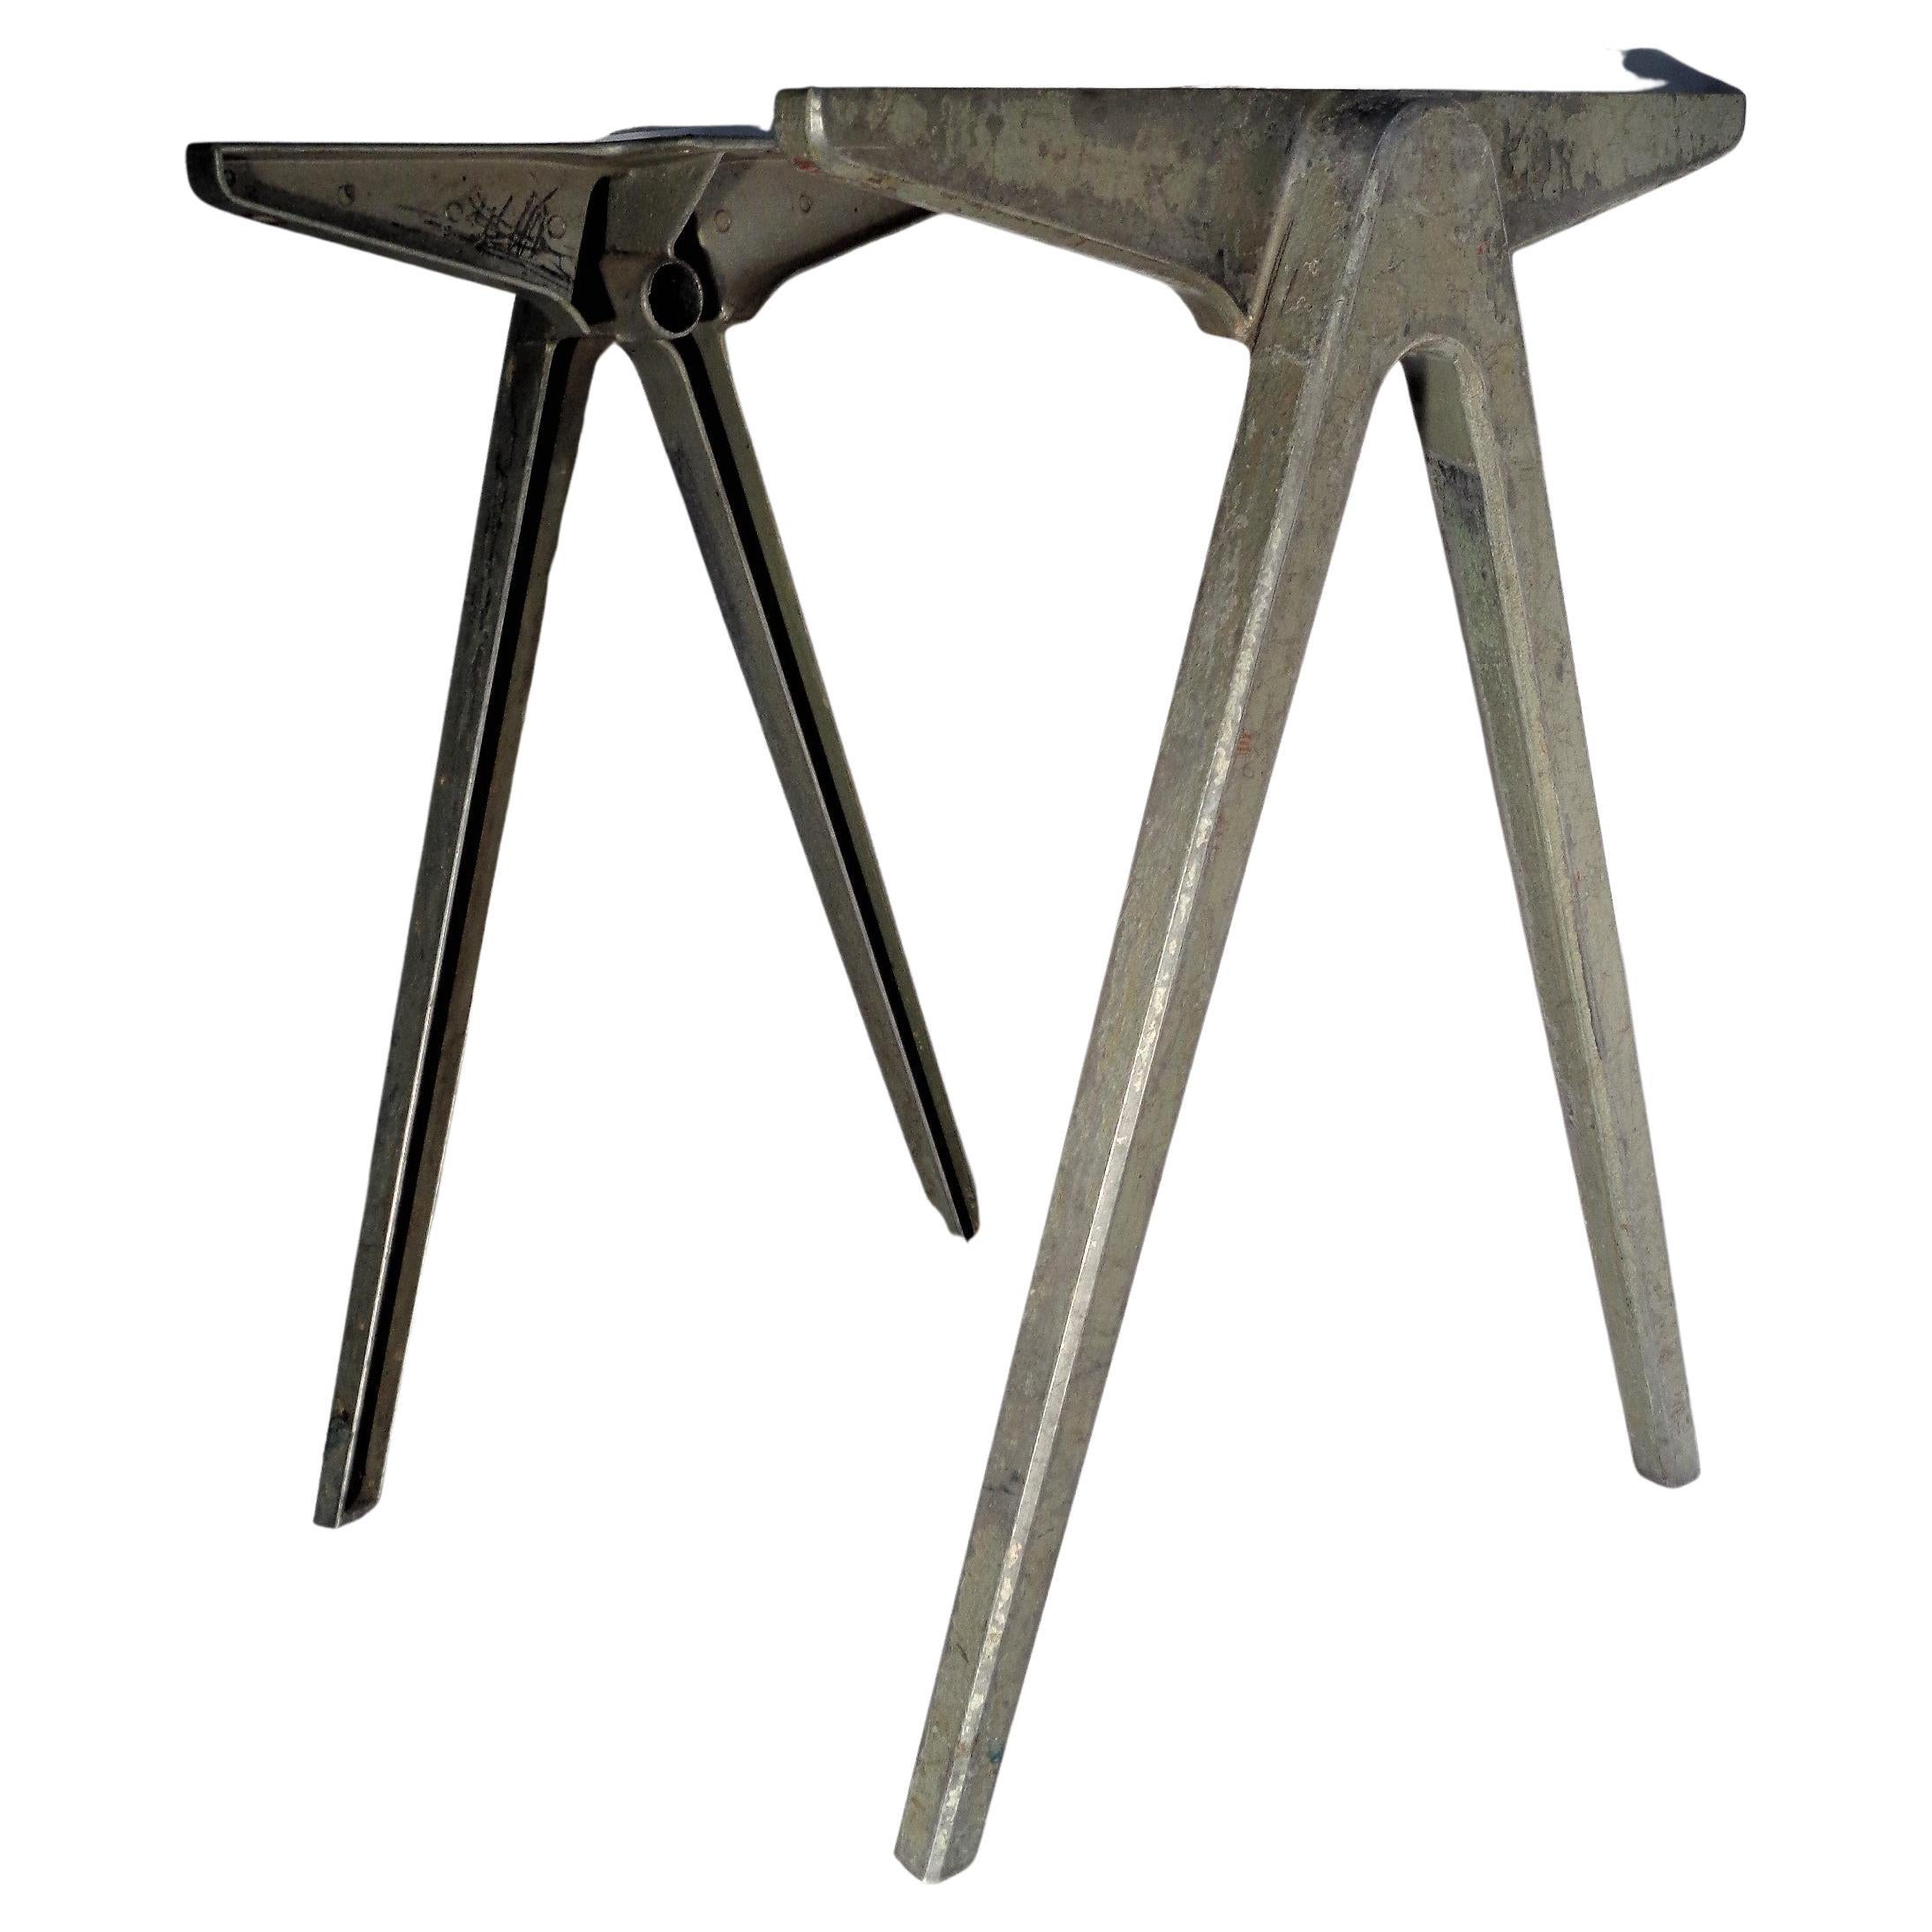  Jean Prouve style Aluminum Compass Table Legs by James Leonard for Esavian  1